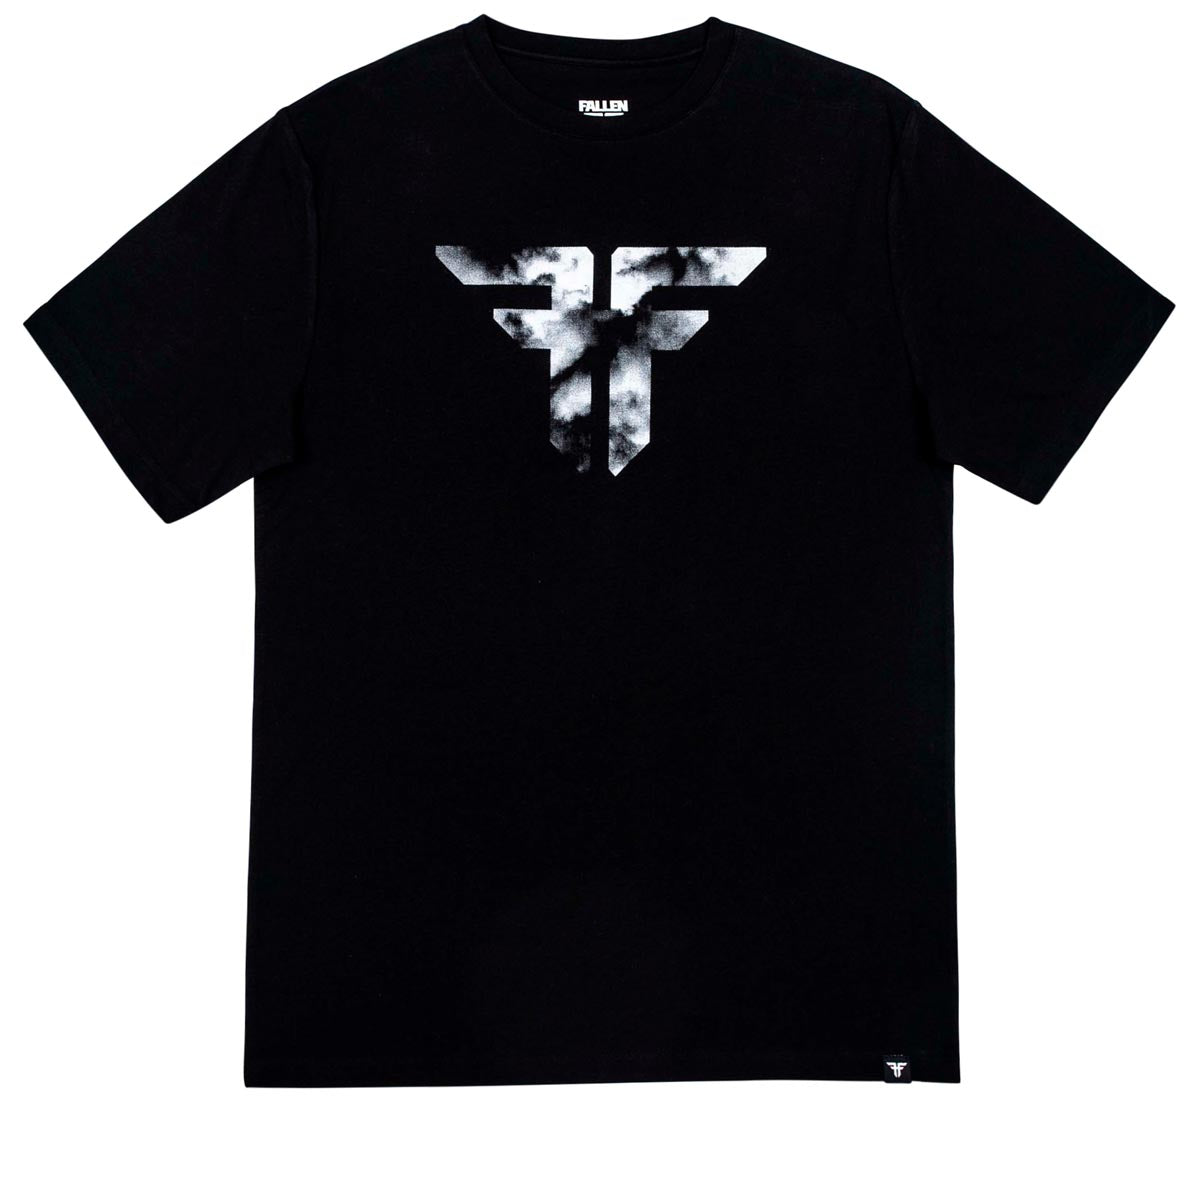 Fallen Trademark T-Shirt - Black/Smoke image 1